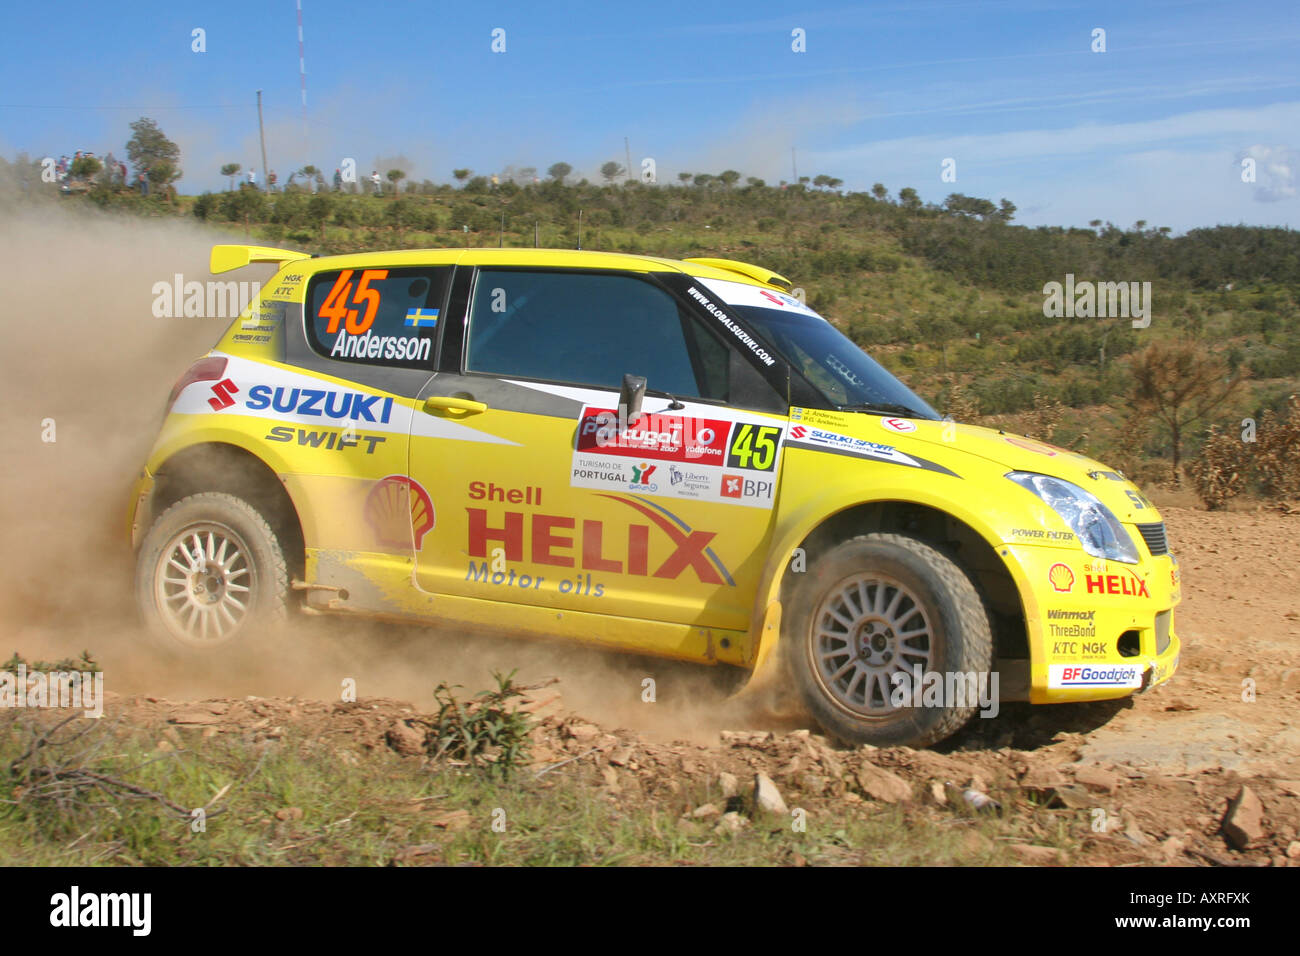 suzuki world rally car racing on the Portugal Rally 2007 Stock Photo - Alamy